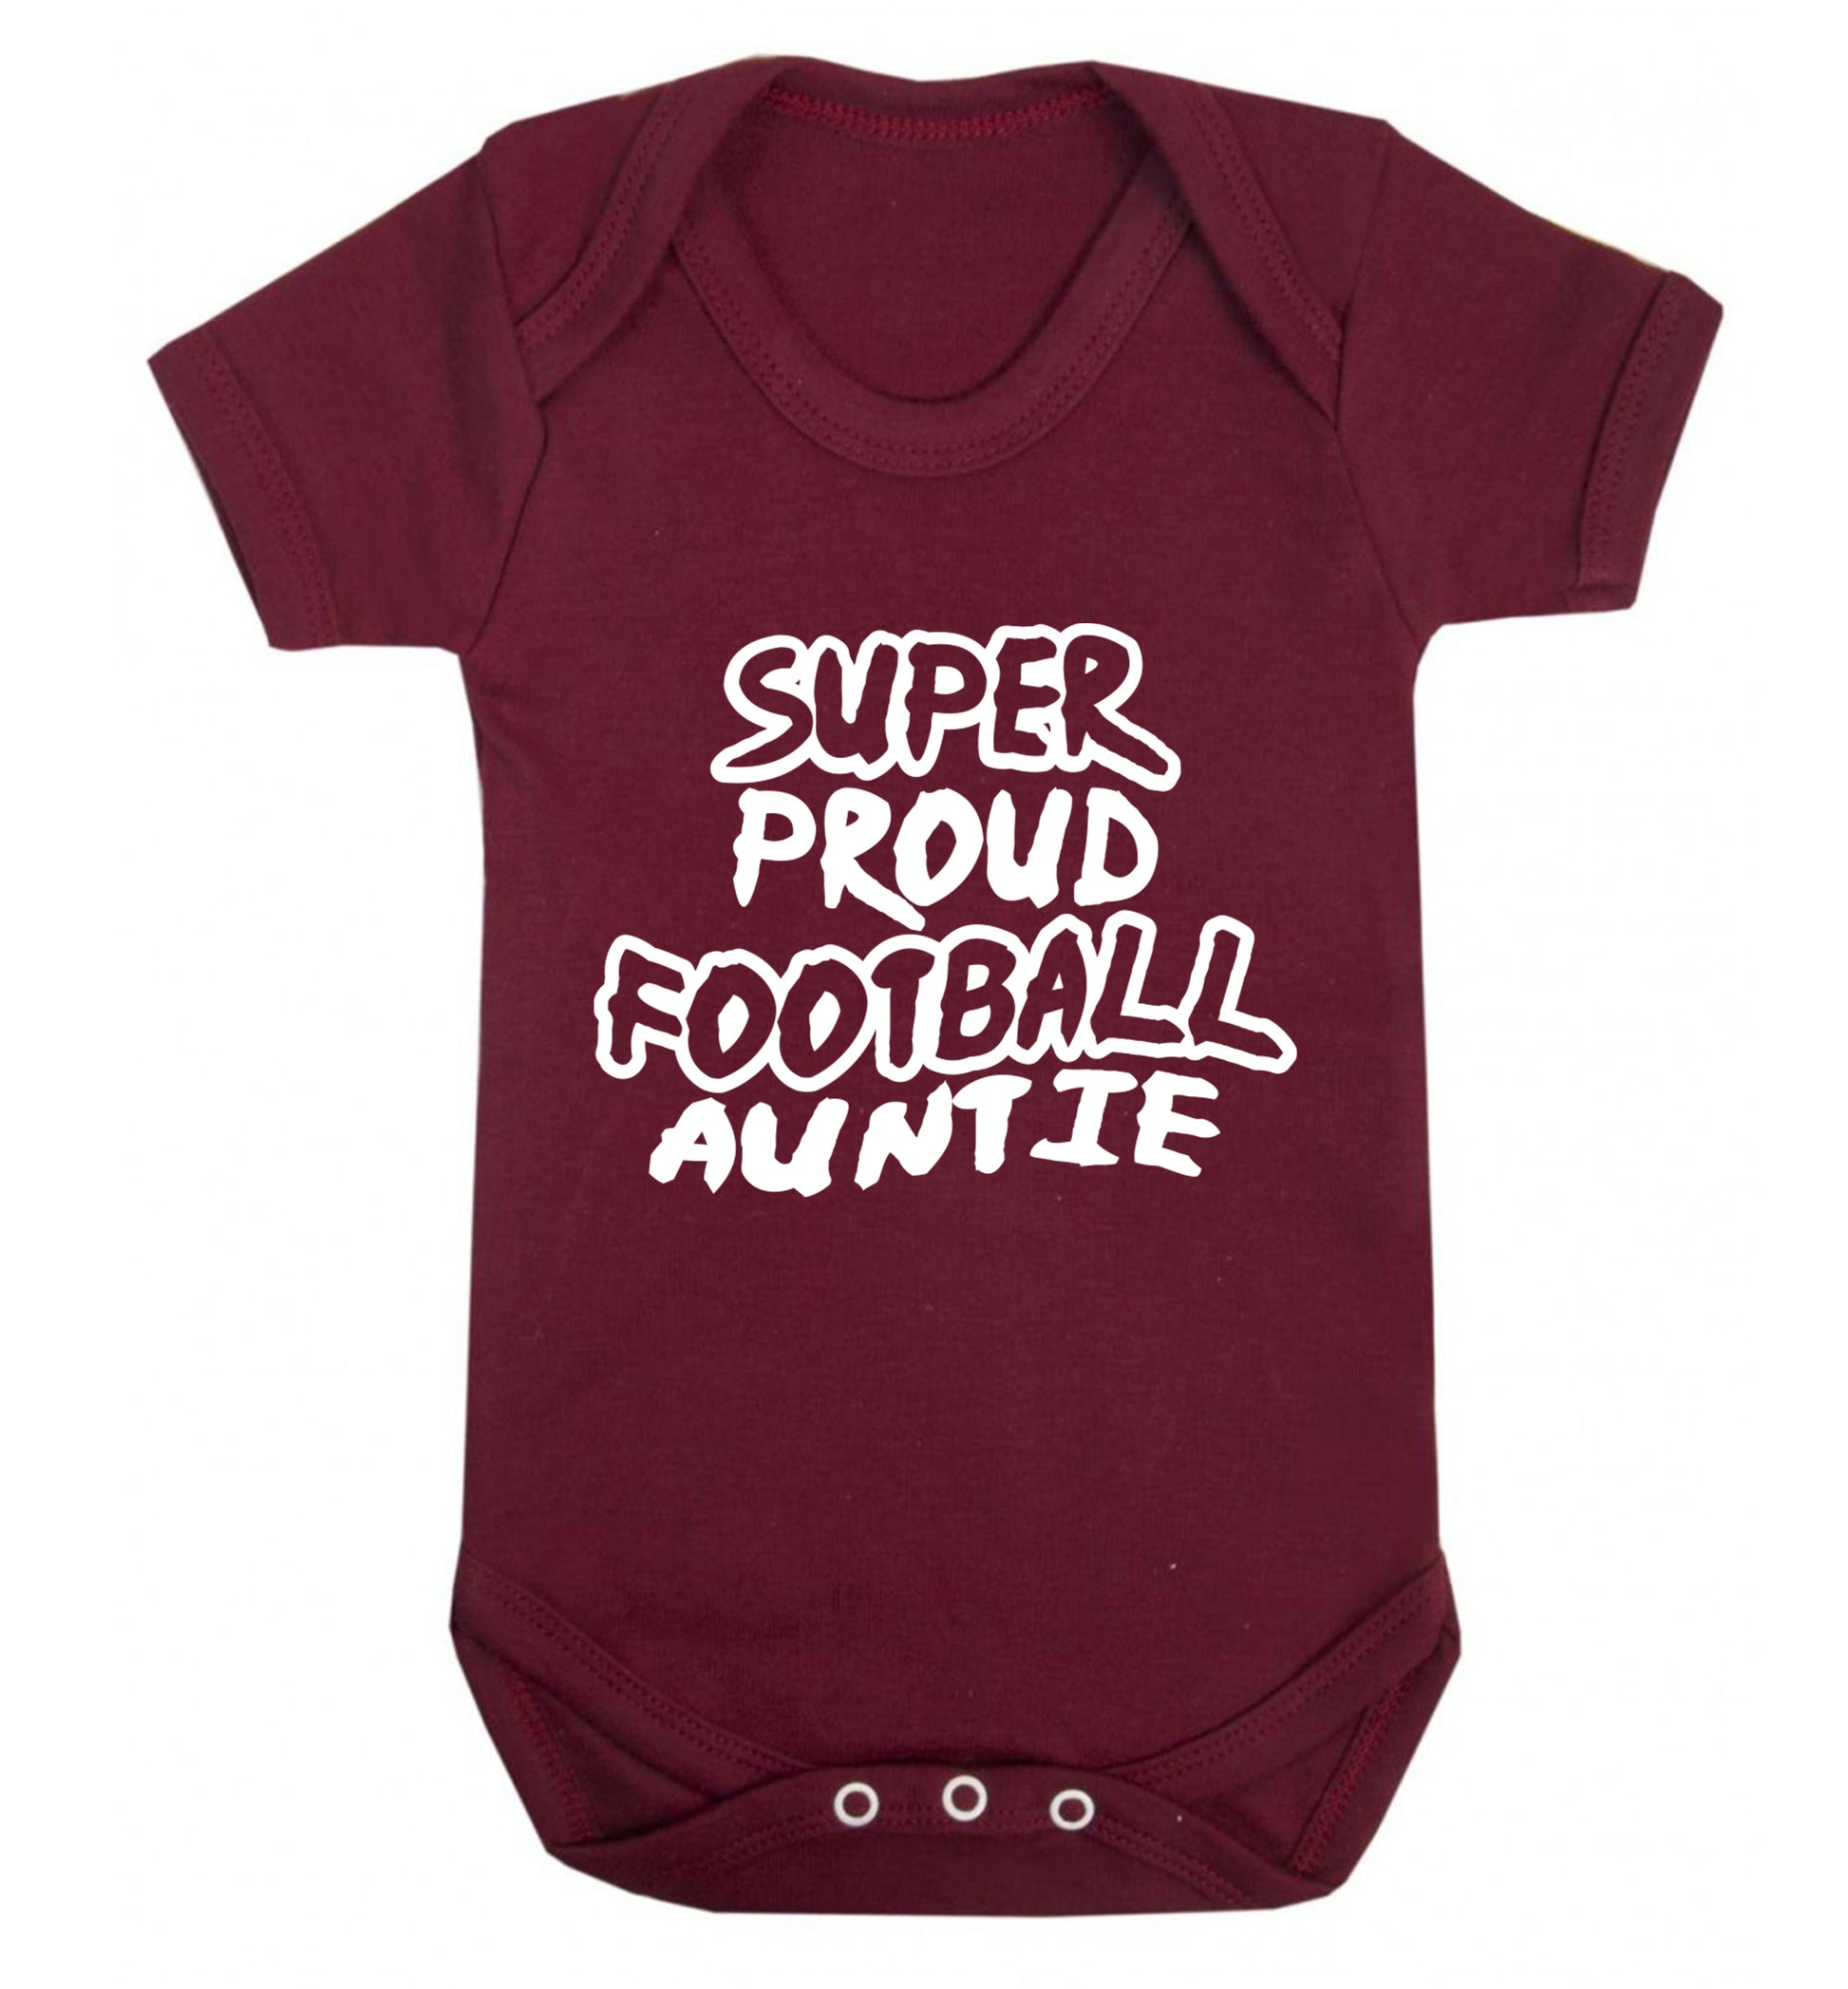 Super proud football auntie Baby Vest maroon 18-24 months